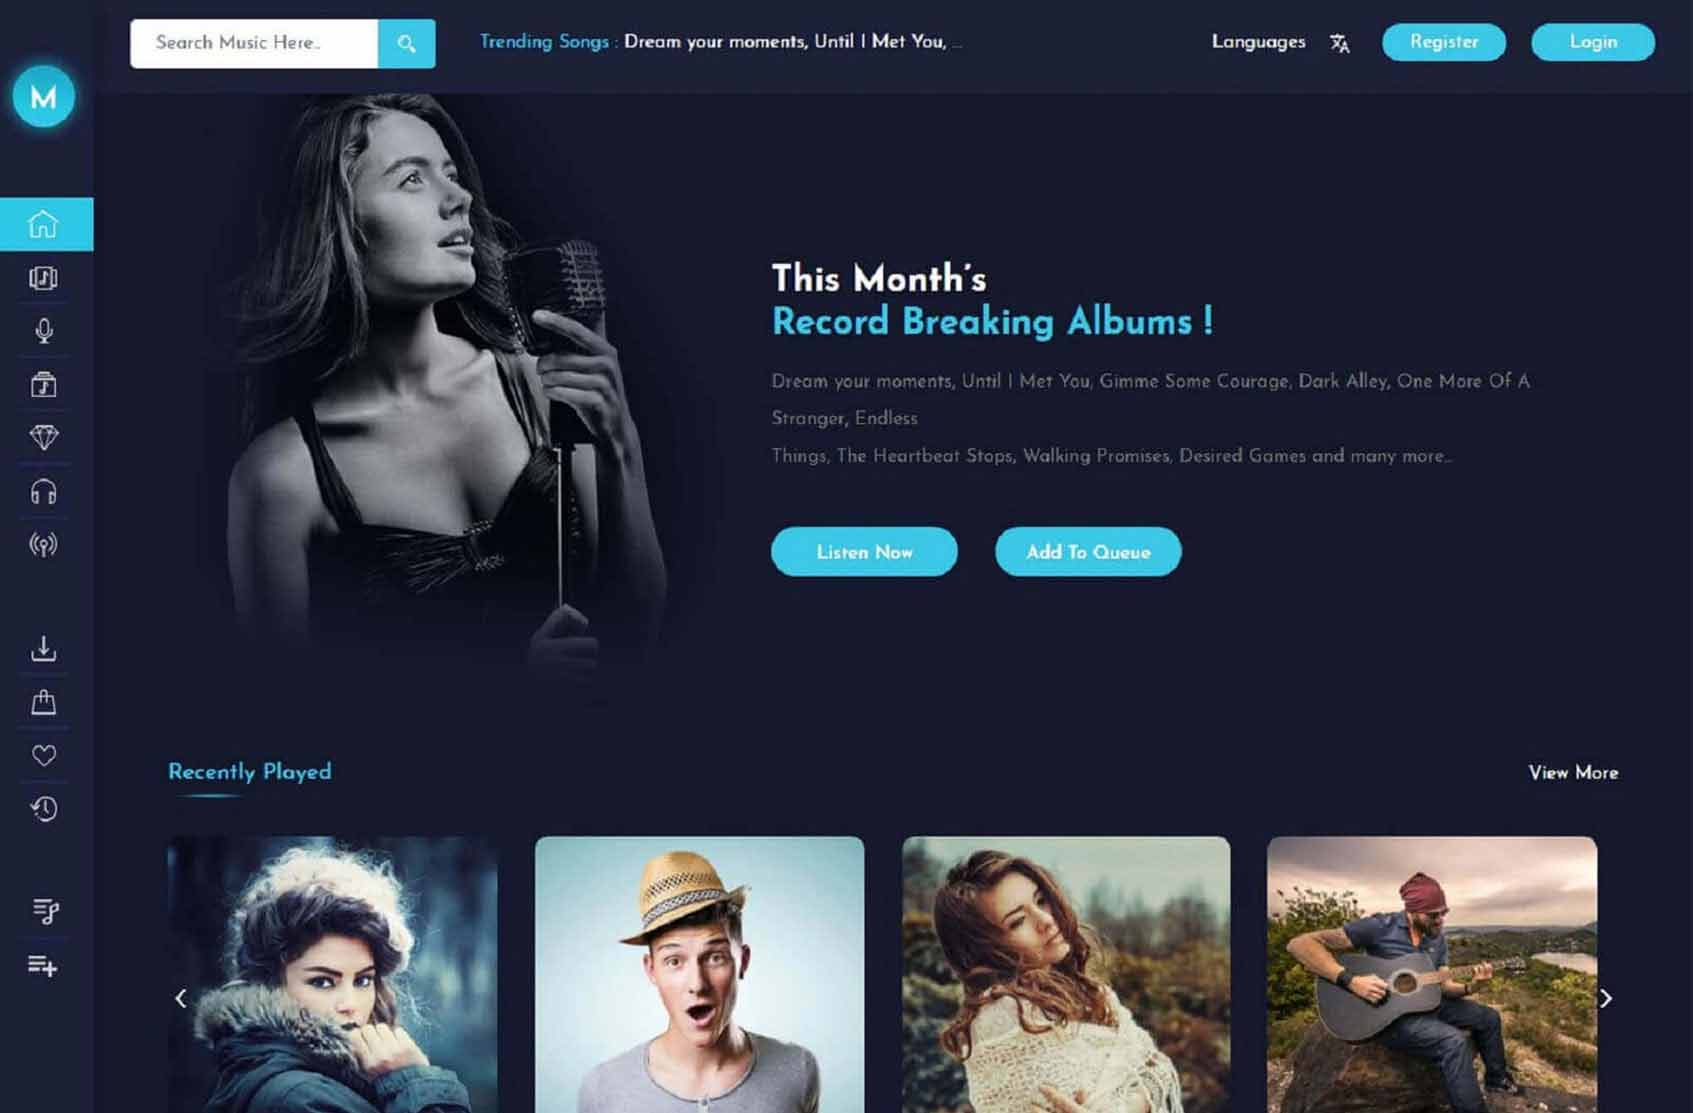 Miraculous - Online Music Store WordPress Theme